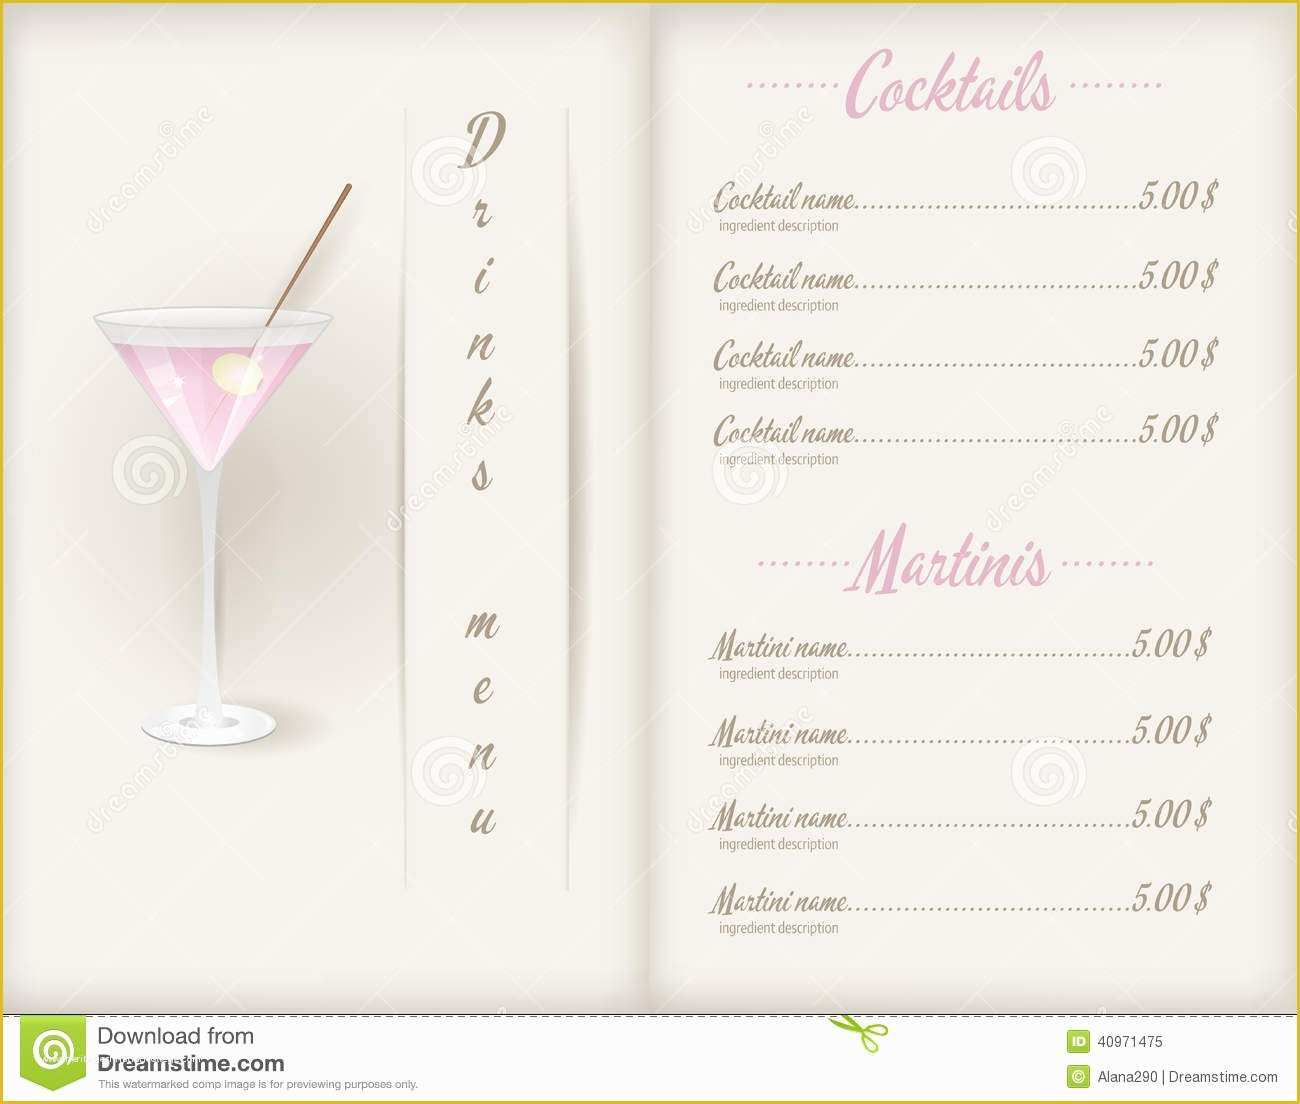 Cocktail Menu Template Free Of 8 Drink Menu Design Cocktail Menu Templates Free